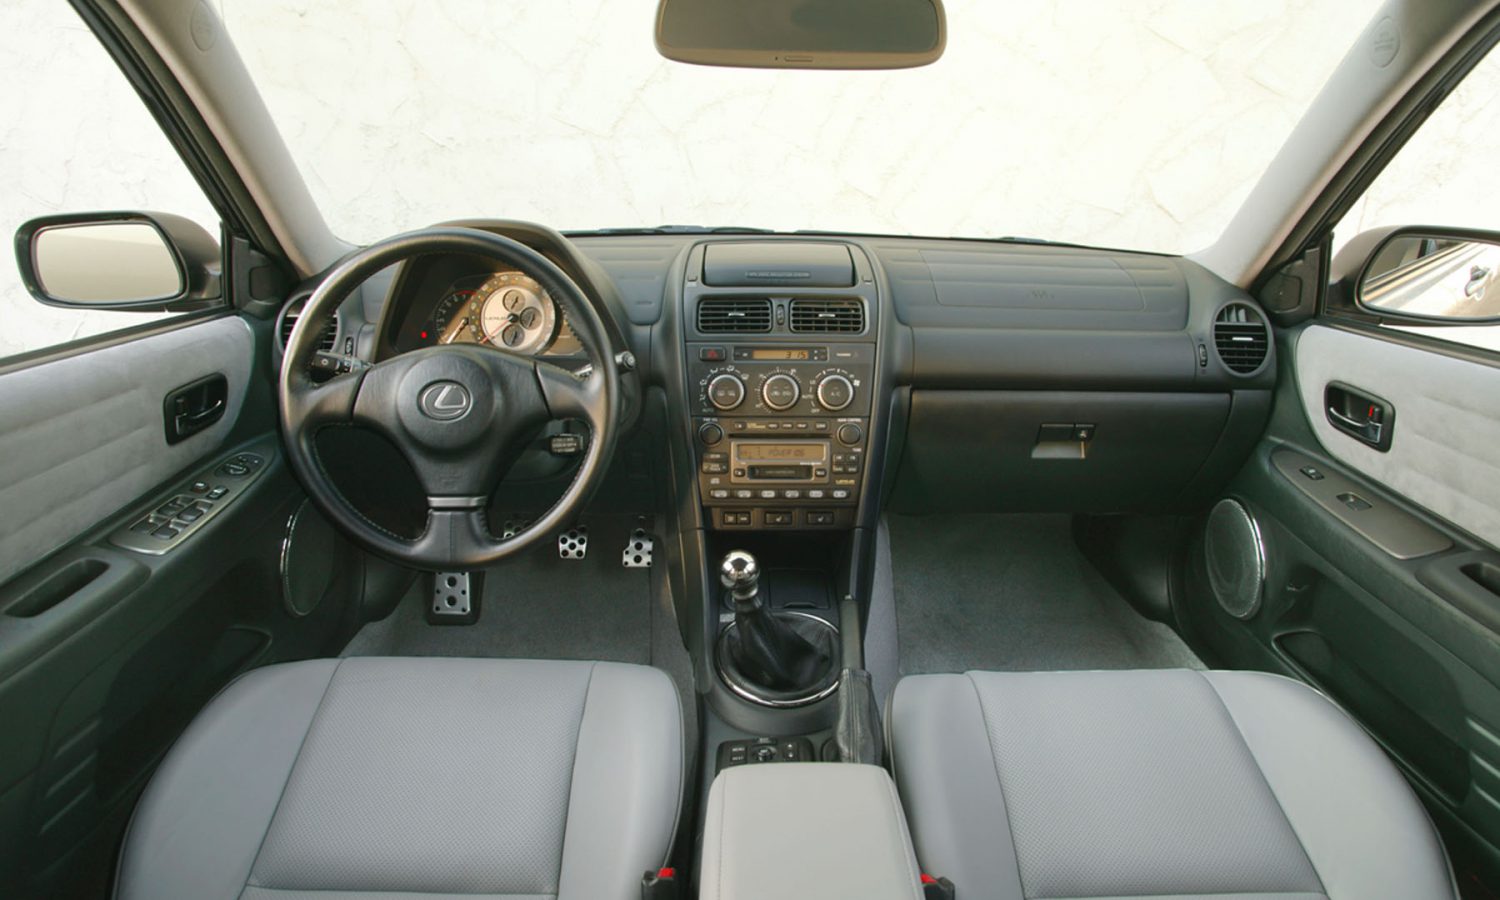 2003 Lexus IS 300 SportDesign interior 002 - Lexus USA Newsroom